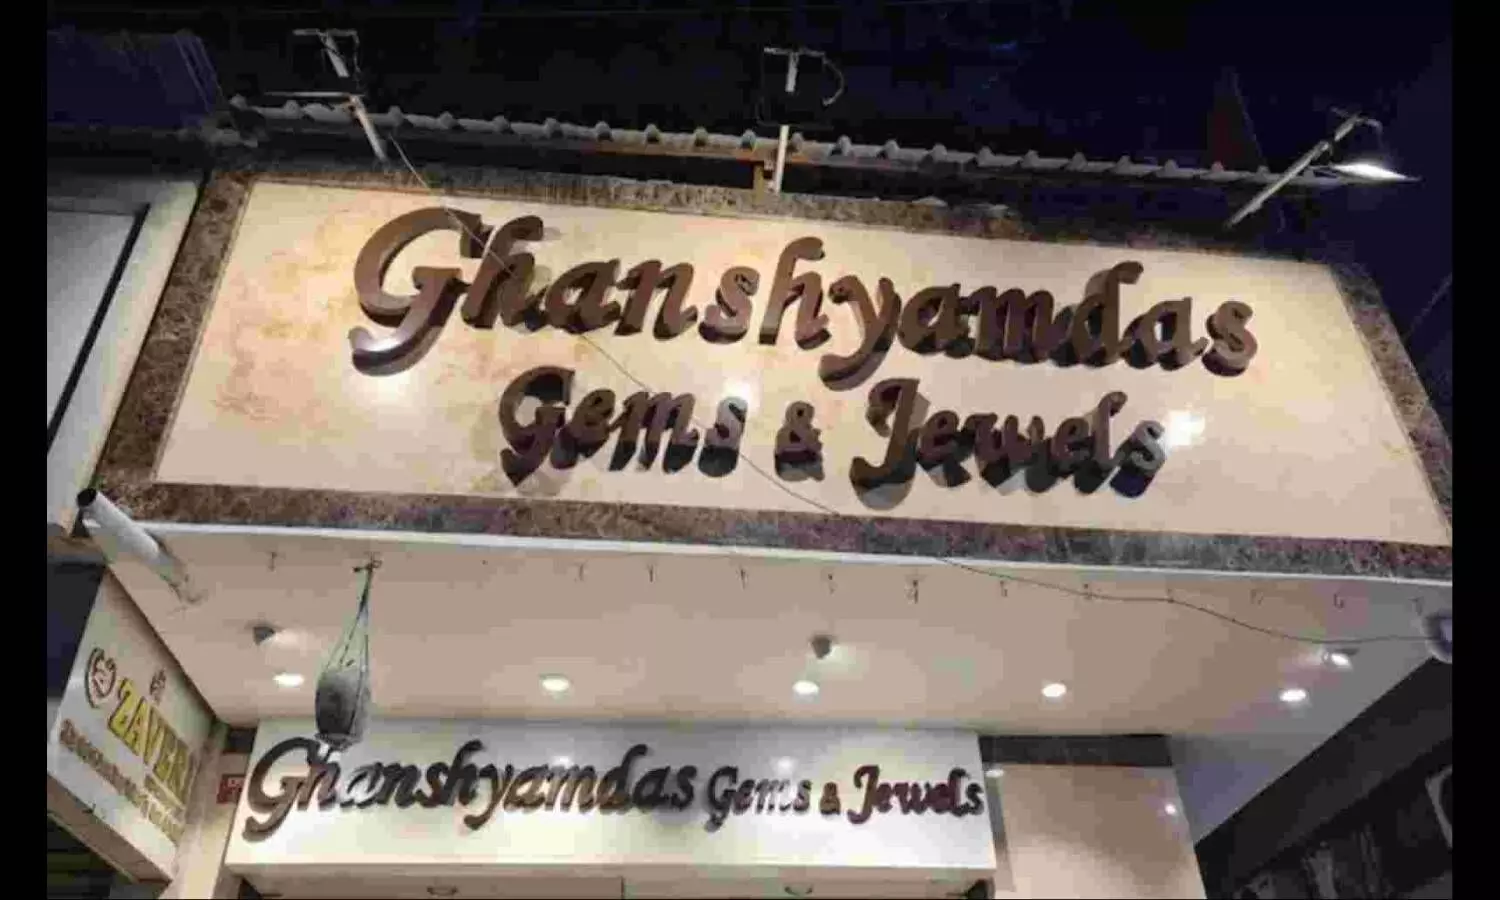 Hyderabad based Ghanshyamdas Gems and Jewels owner Sanjay Agarwal arrested in Rs 100 Cr gold scam